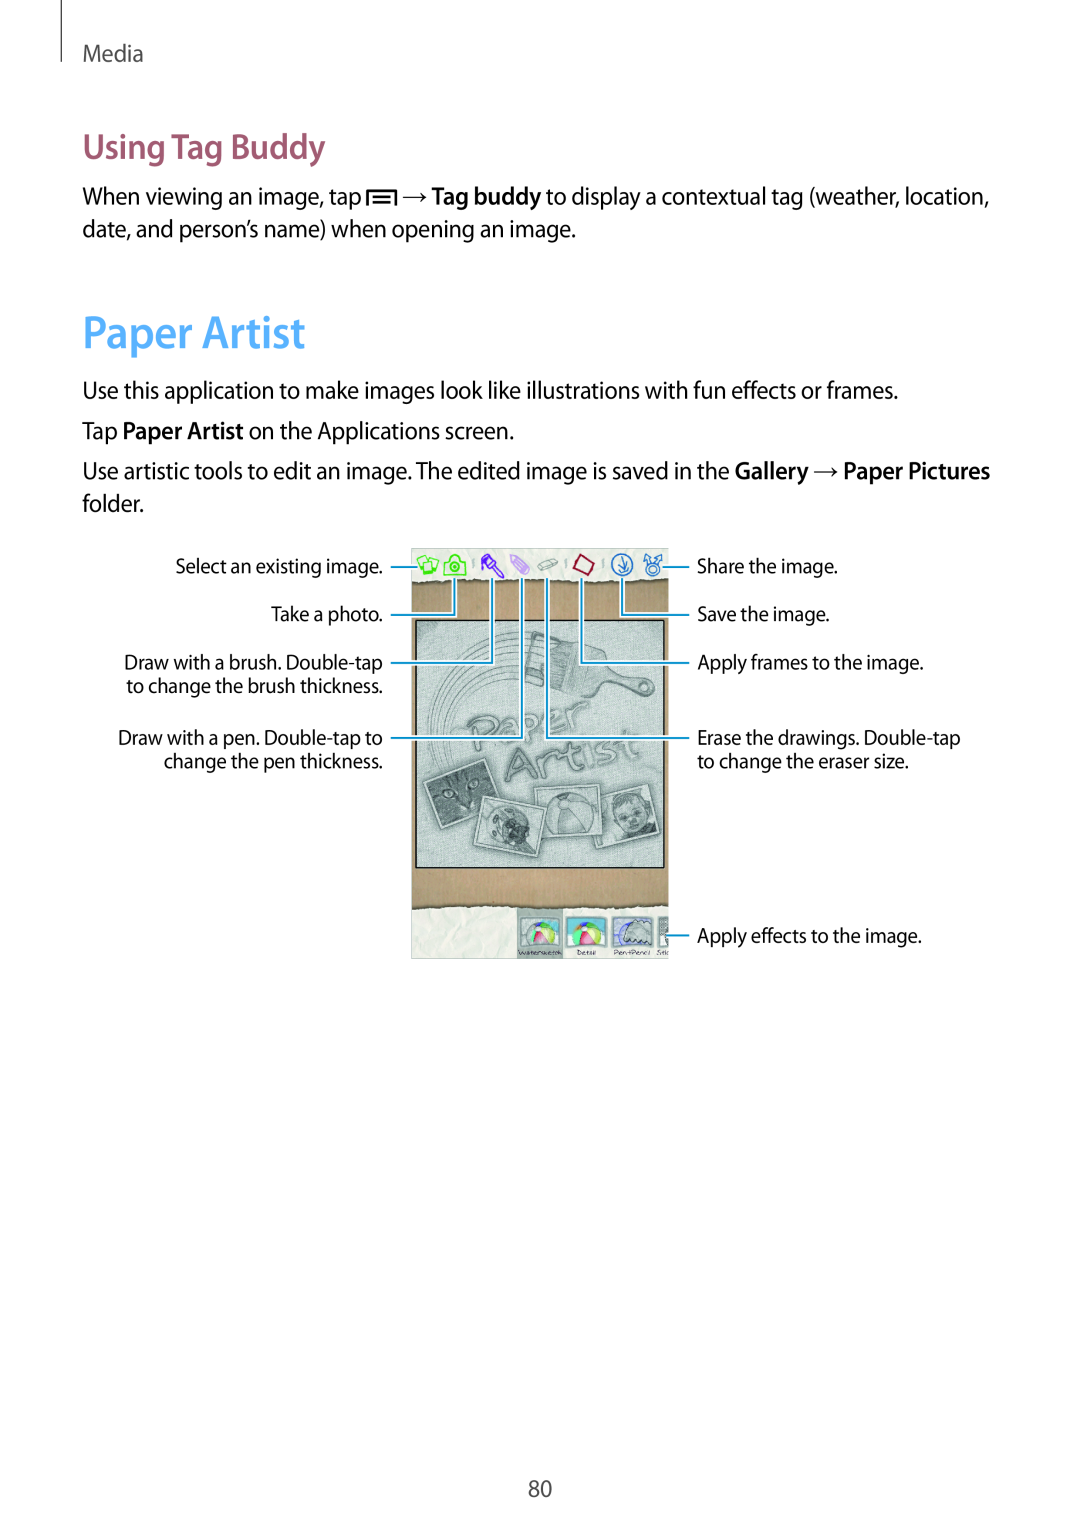 Samsung GT-N5100 user manual Paper Artist, Using Tag Buddy, Media 